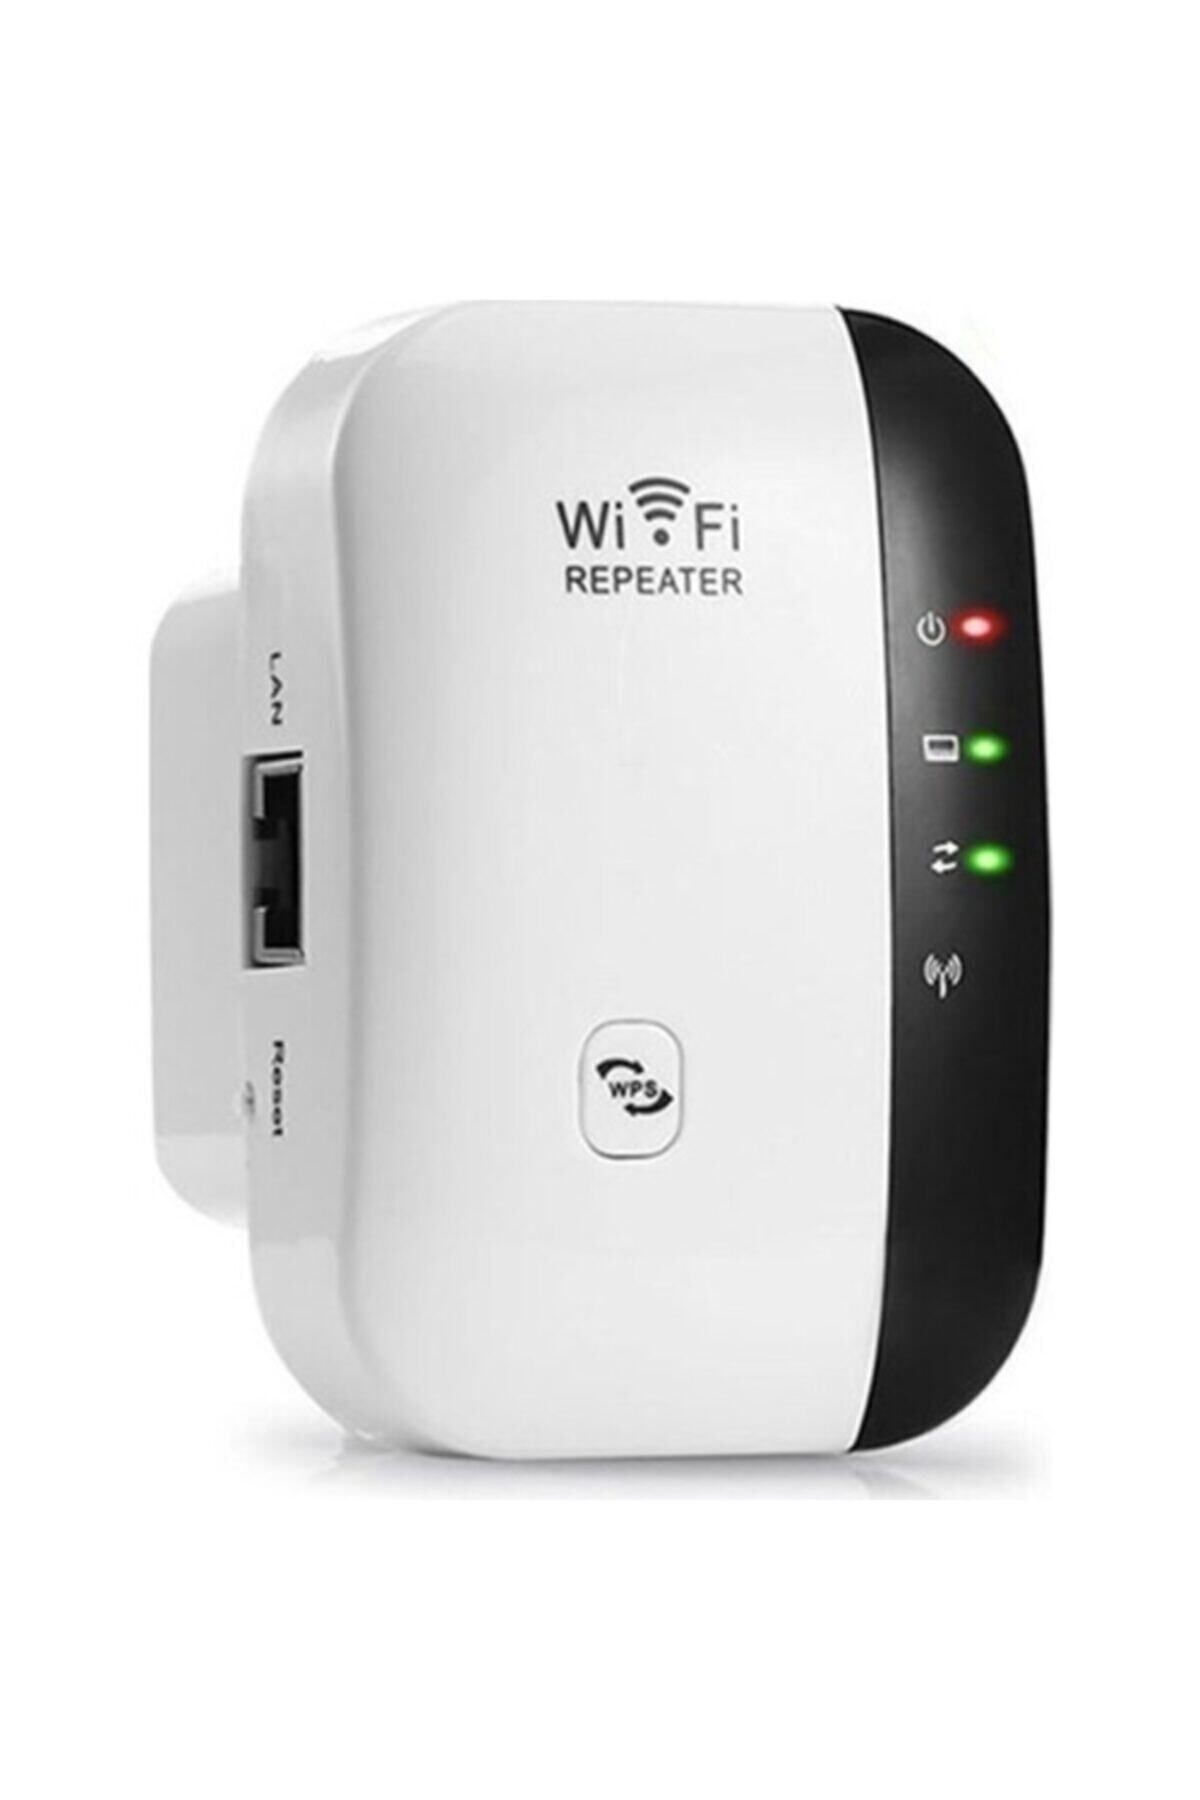 Reidan Kablosuz Sinyal Güçlendirici 300mbps Access Point Wifi Repeater